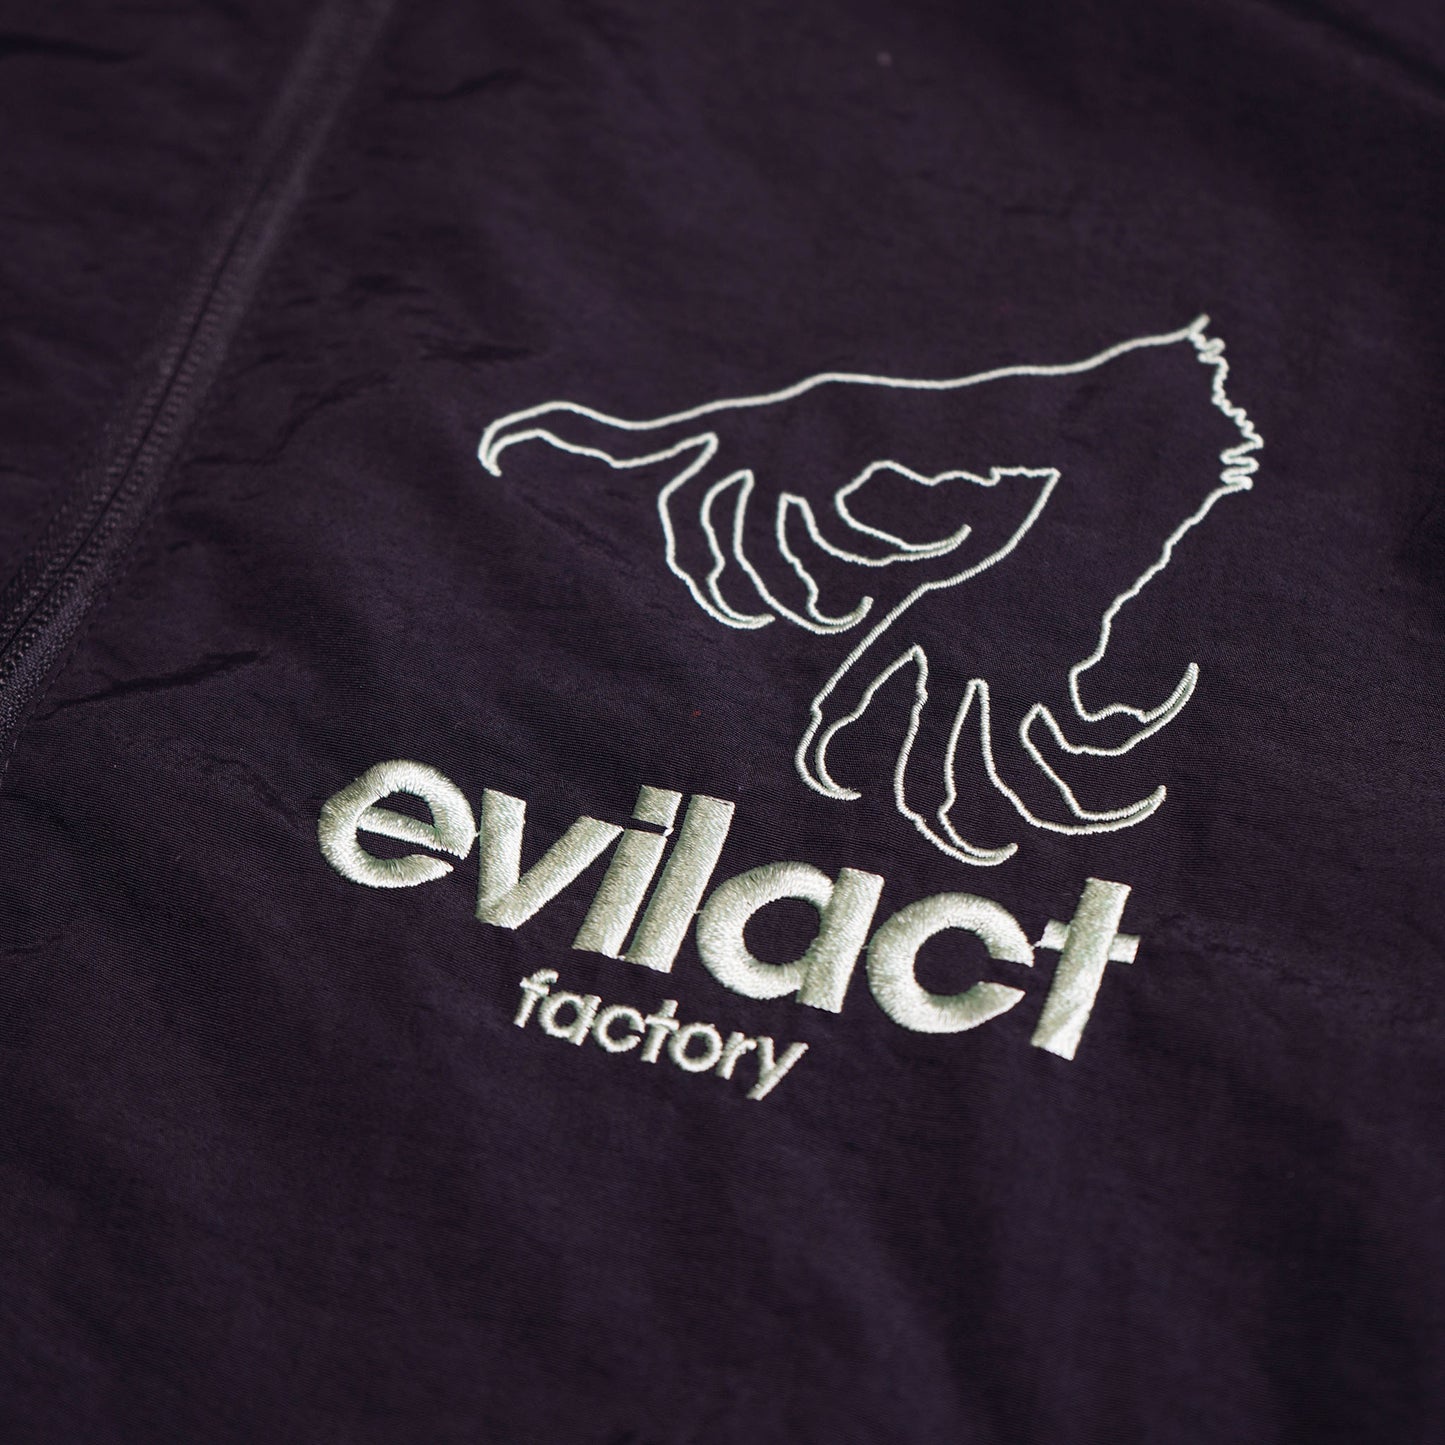 EVILACT Factory Nylon Training Jacket